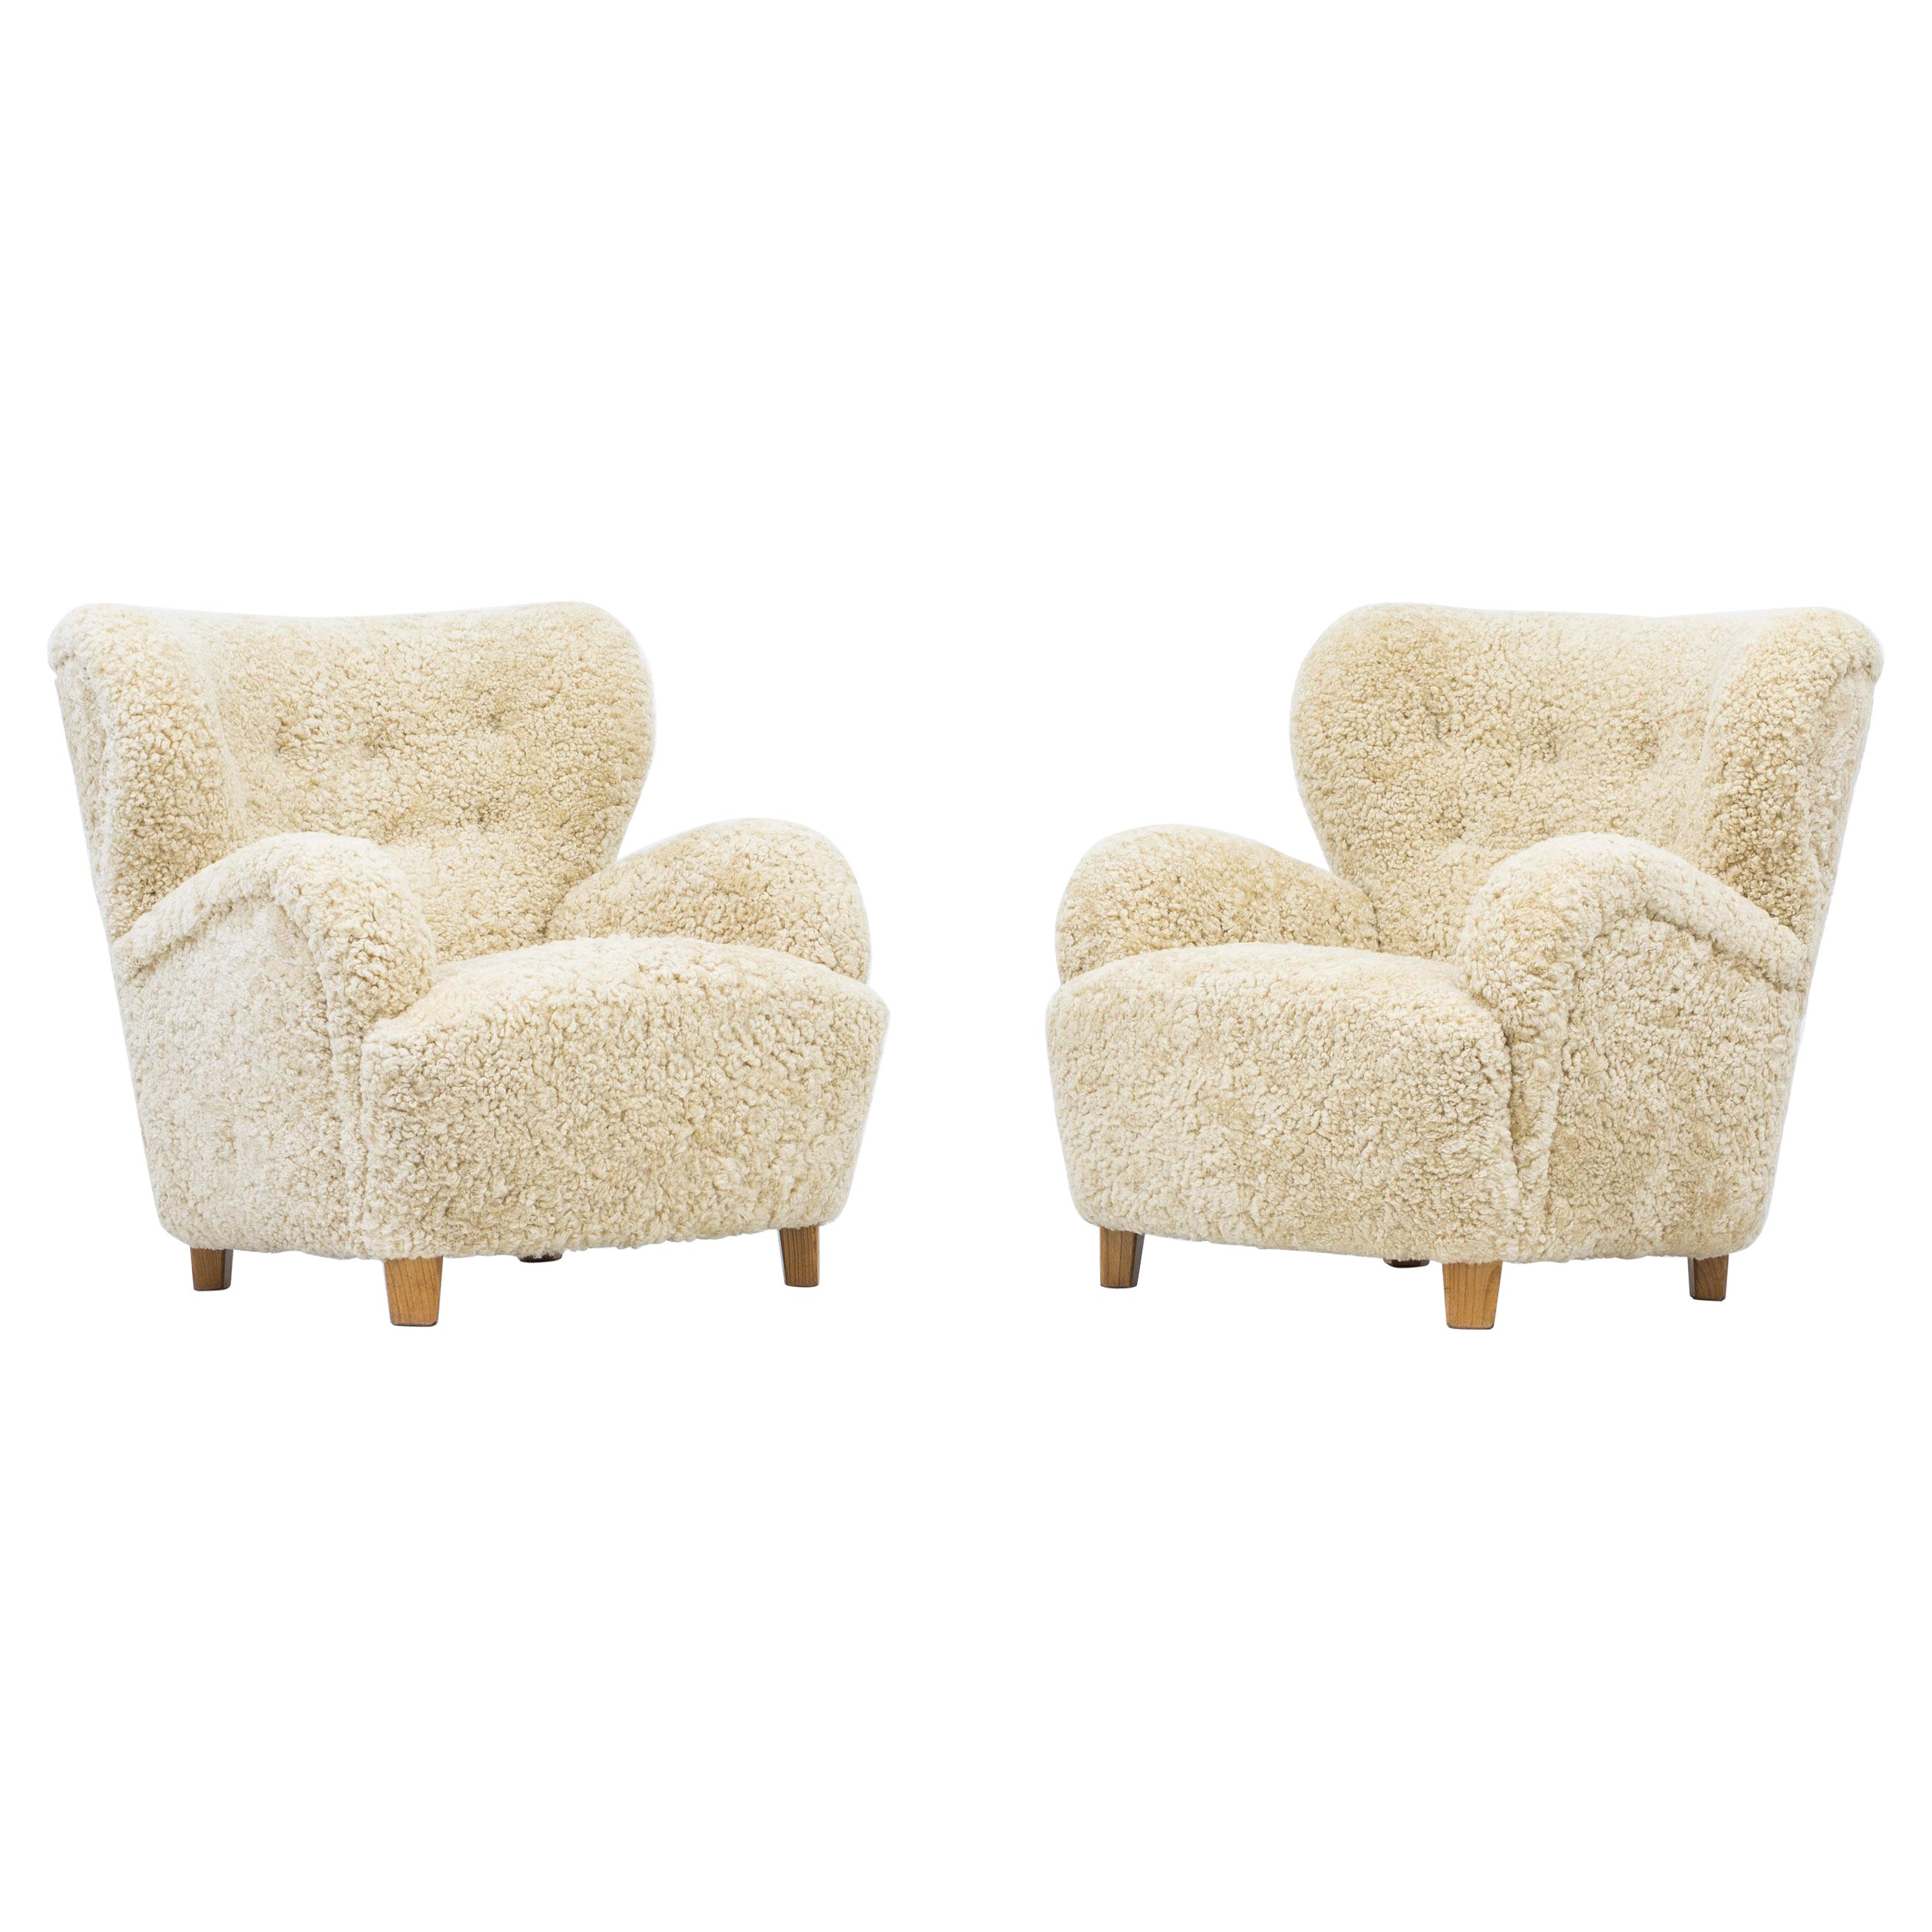 Danish modern sheepskin lounge chairs in the style of Flemming Lassen